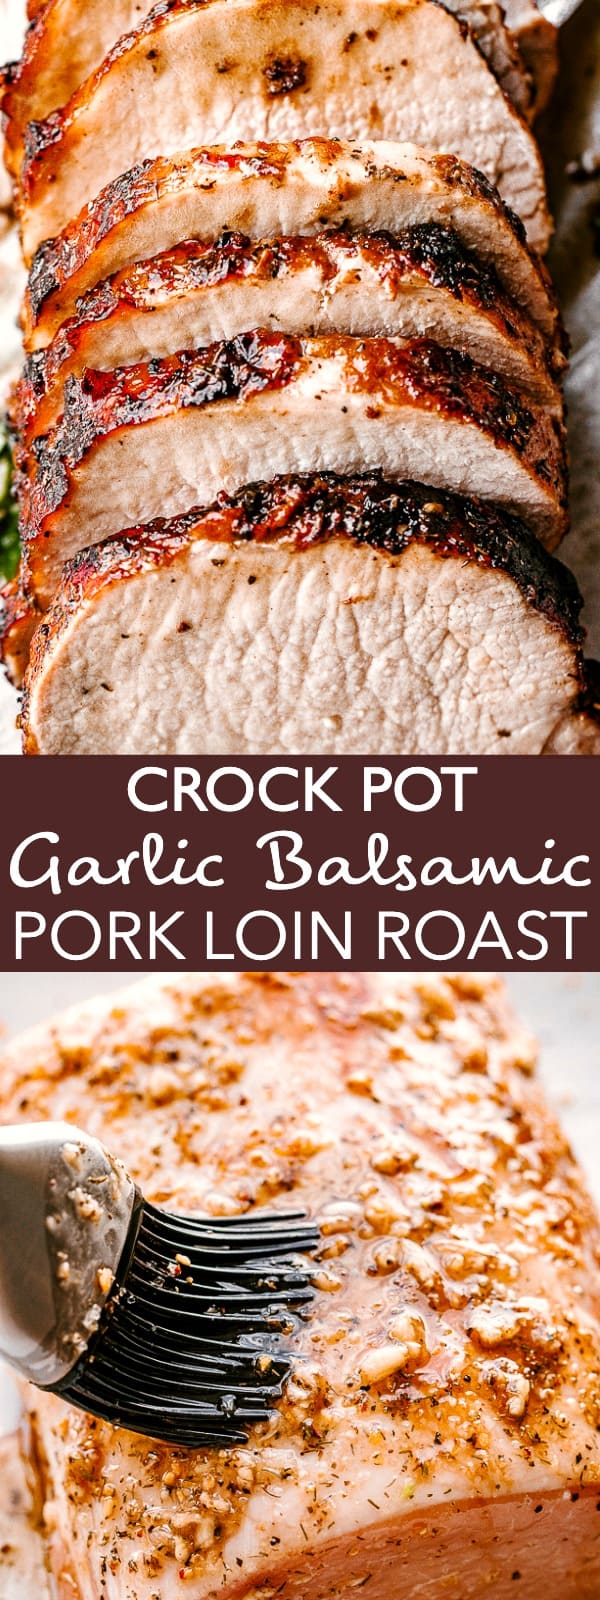 Crock Pot Garlic Balsamic Pork Loin Recipe | Diethood